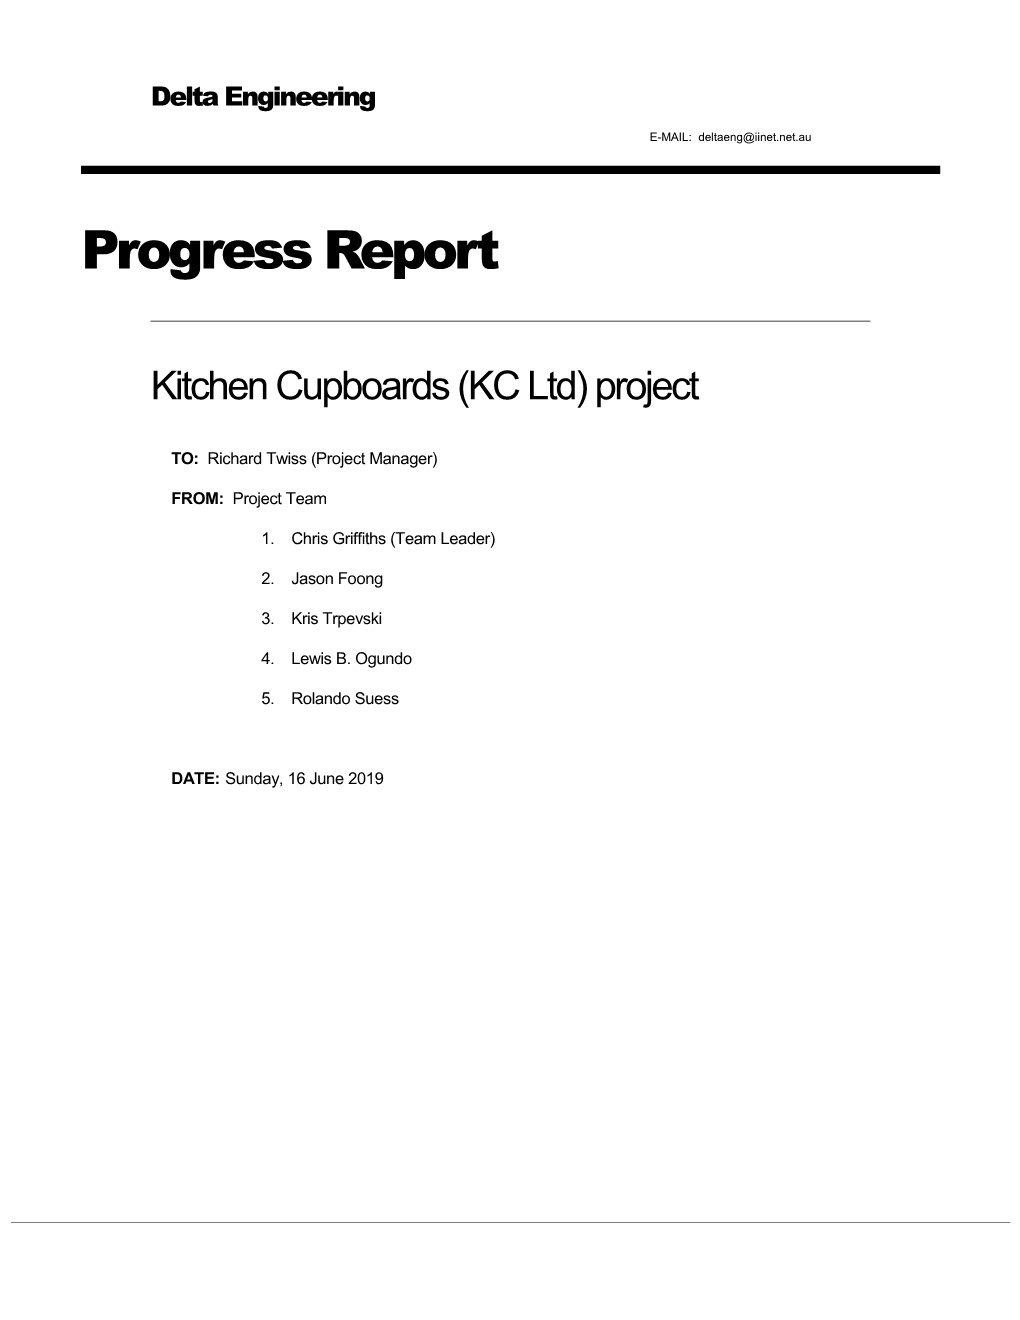 Kitchen Cupboards (KC Ltd) Project